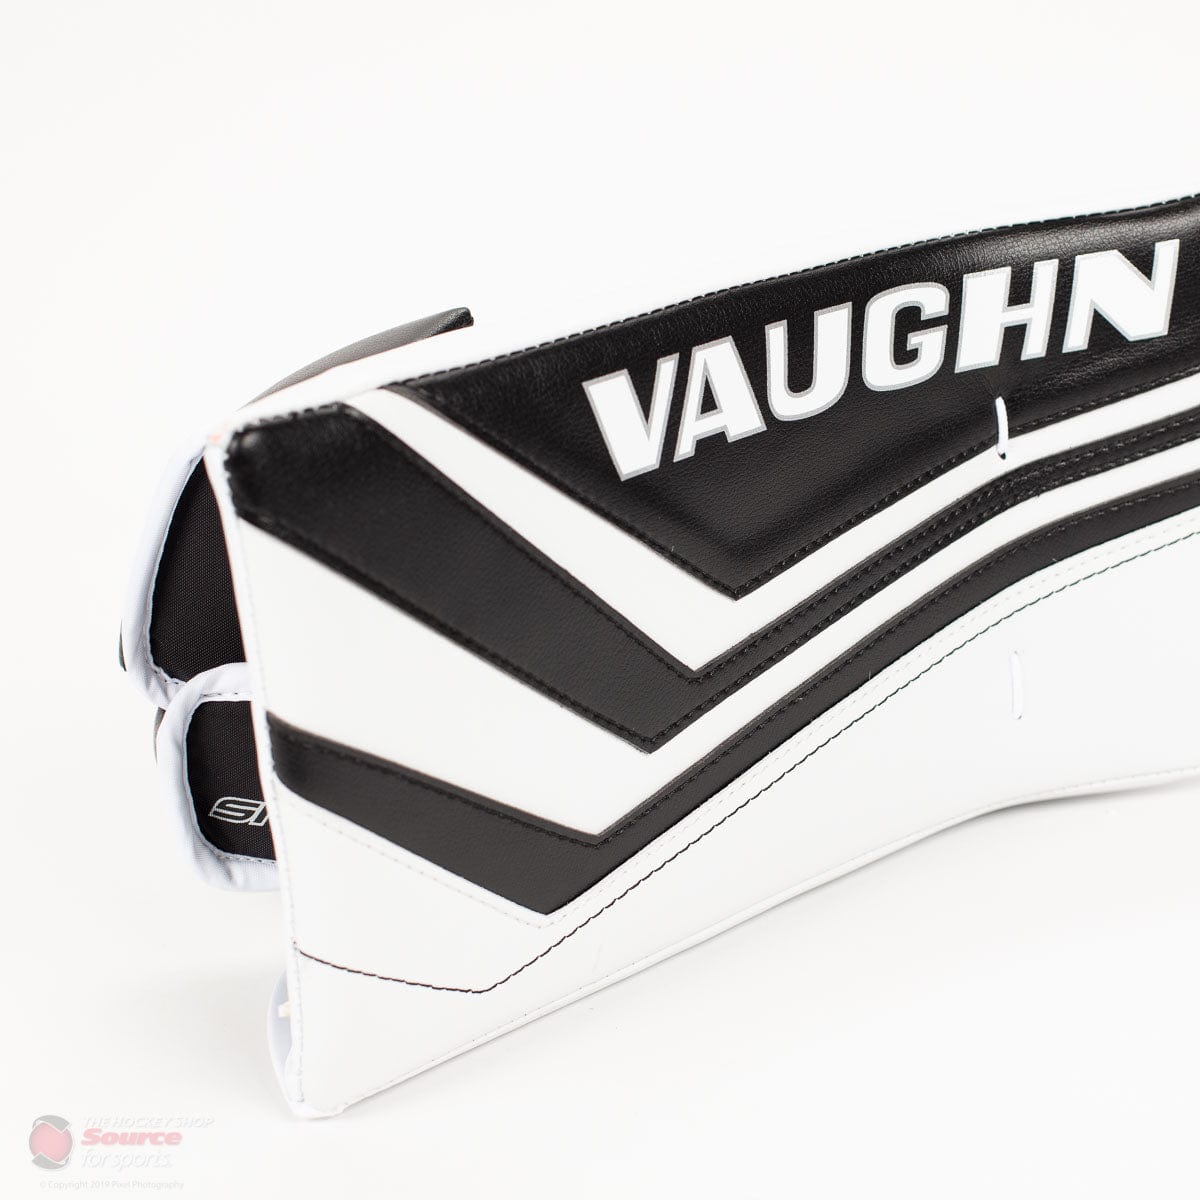 Vaughn Ventus SLR2 Intermediate Goalie Blocker